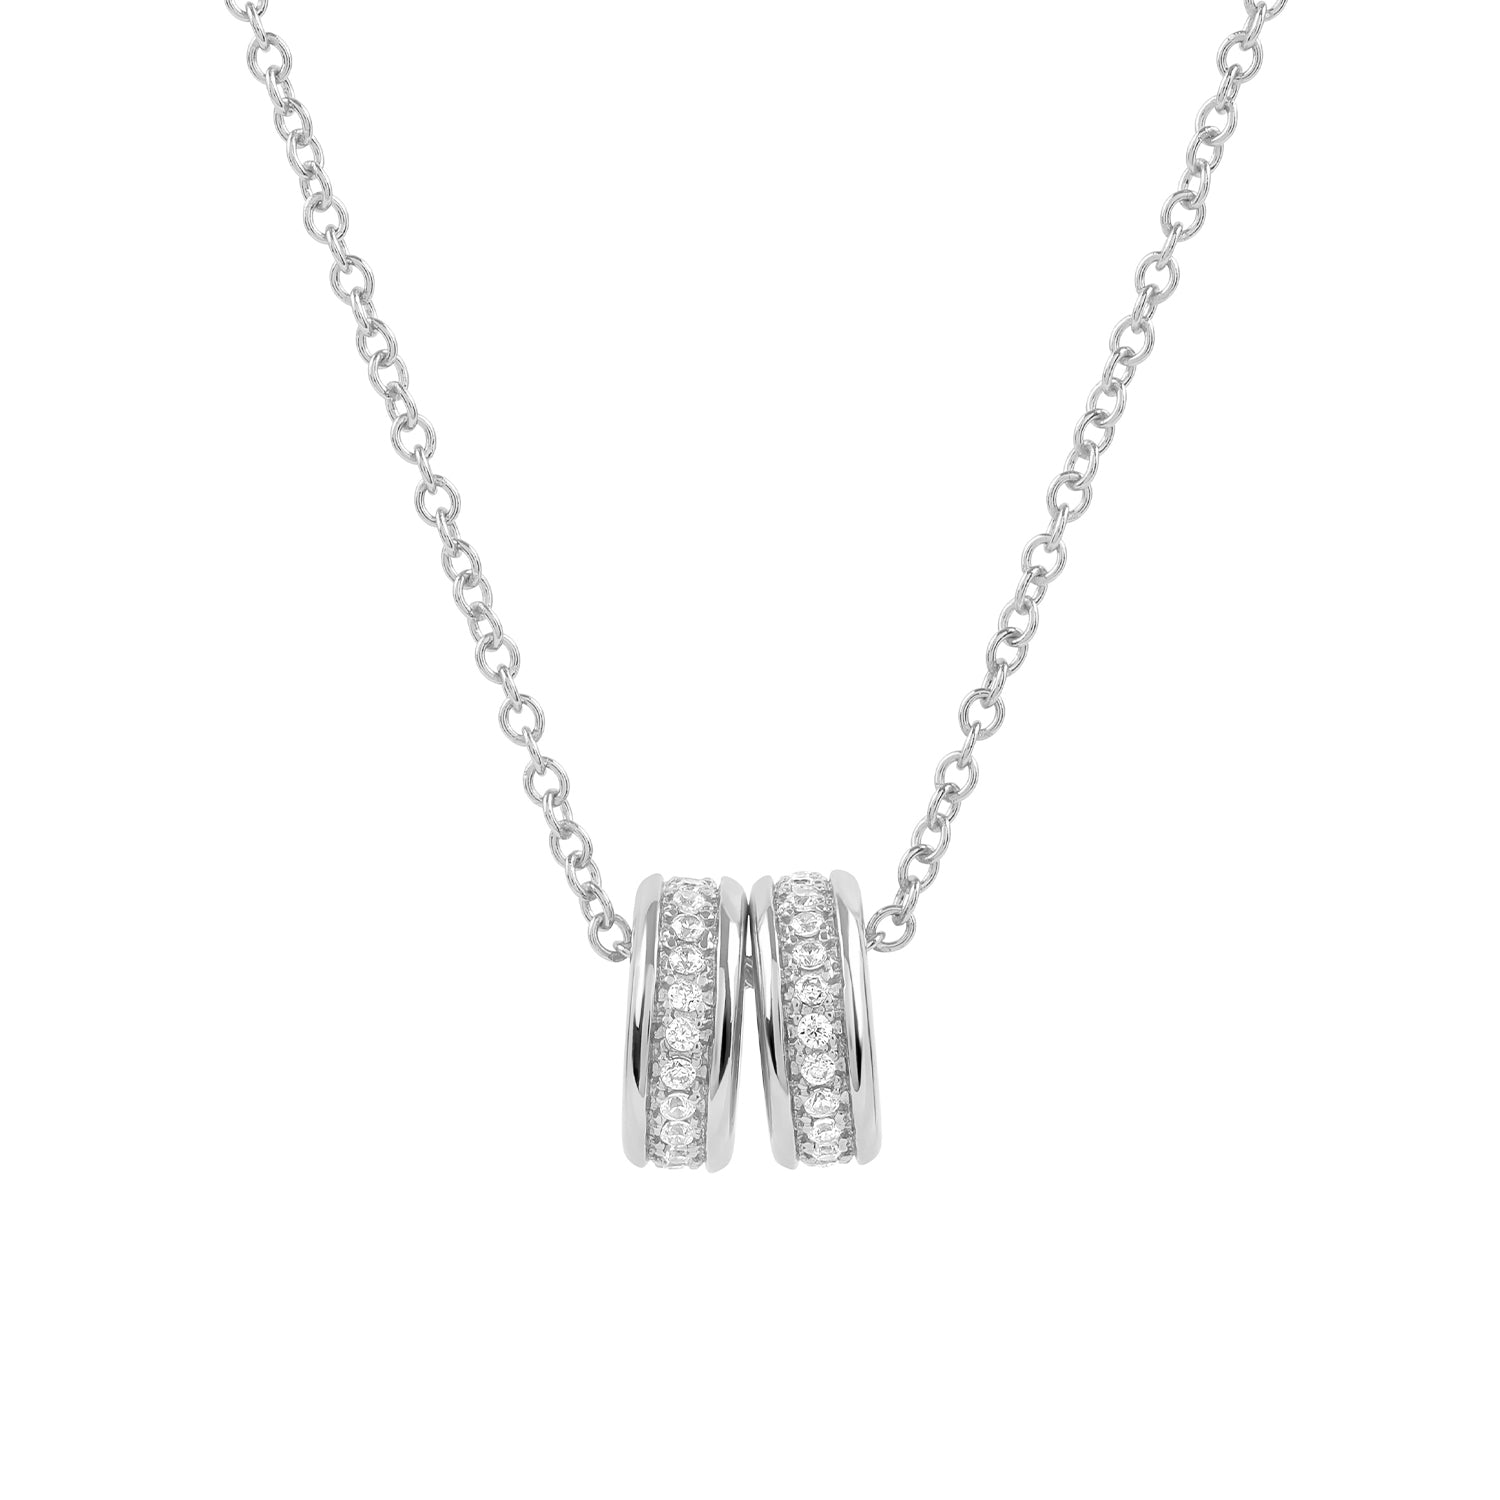 Elegant and minimalist 925 silver pendant necklace set with cubic zirconia stones.